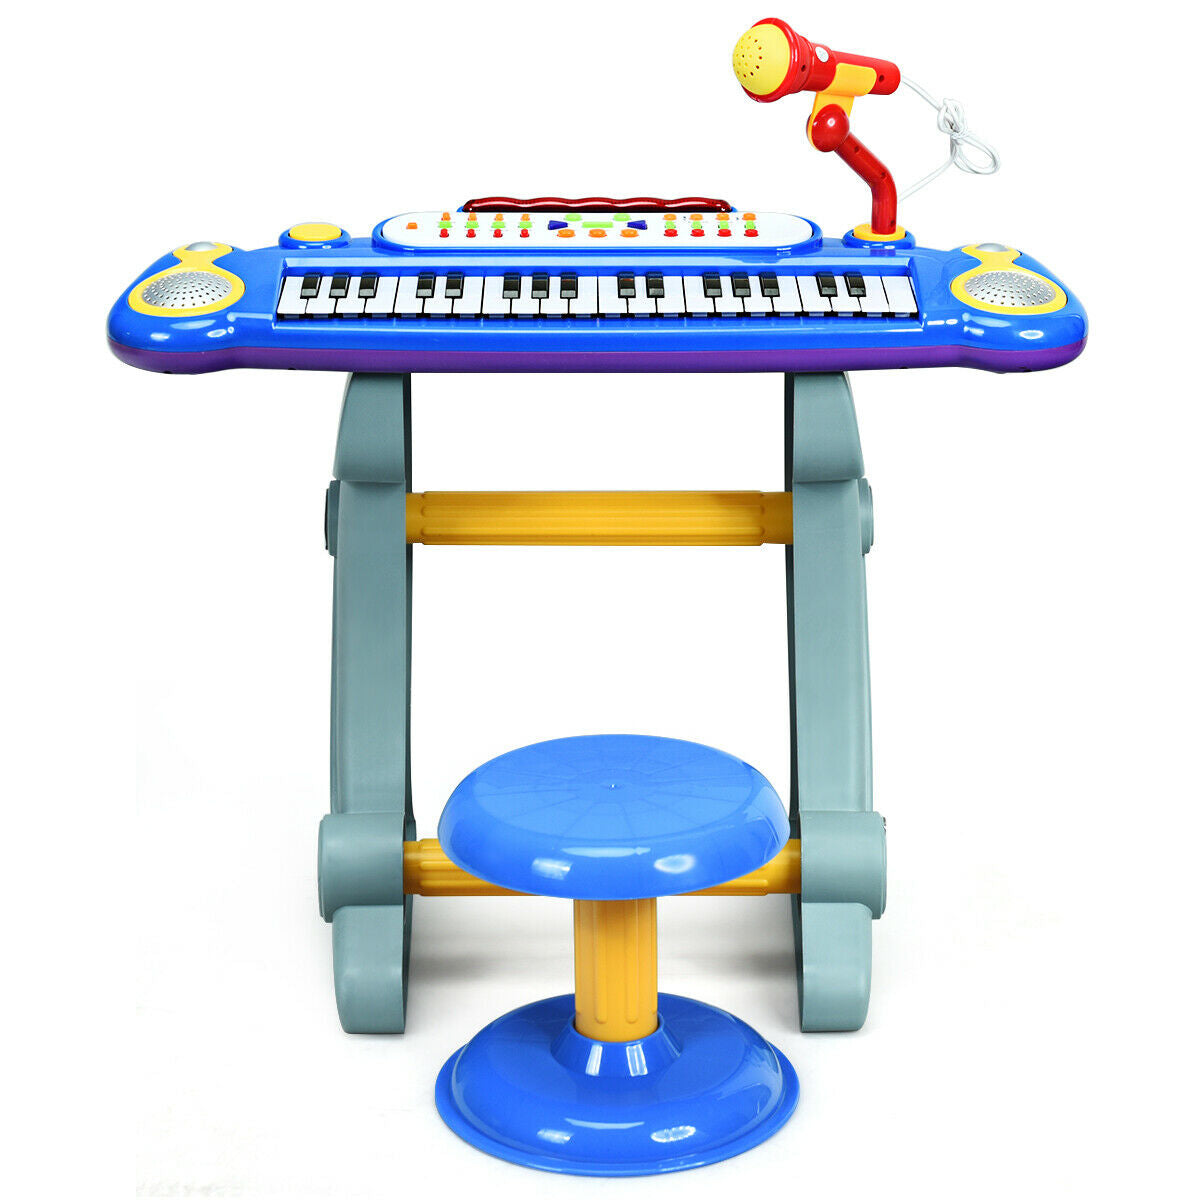 Hikidspace 37 Key Electronic Keyboard Kids Toy Piano